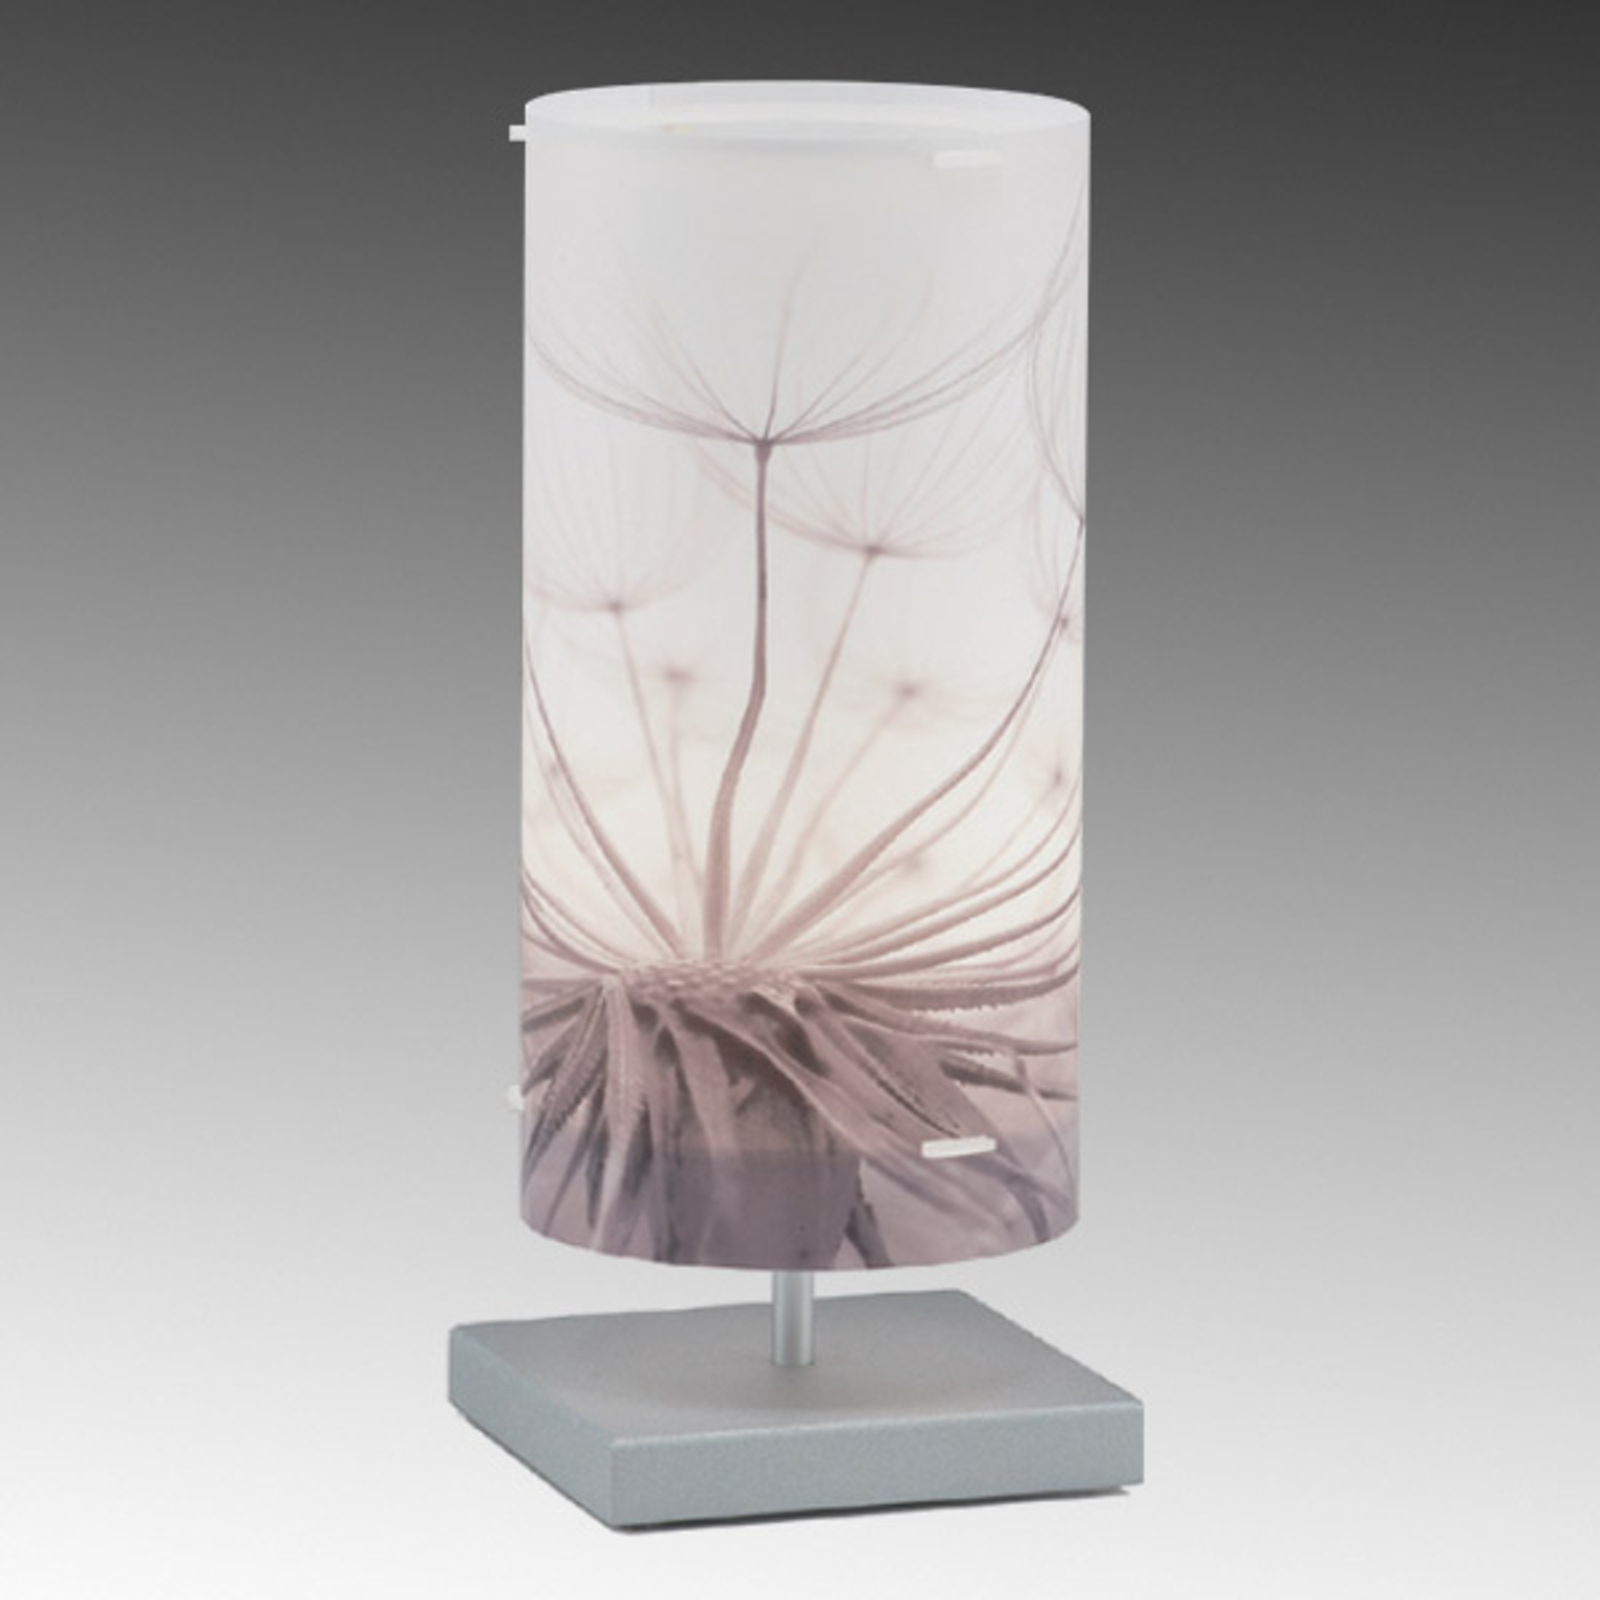 Dandelion - table lamp in natural design